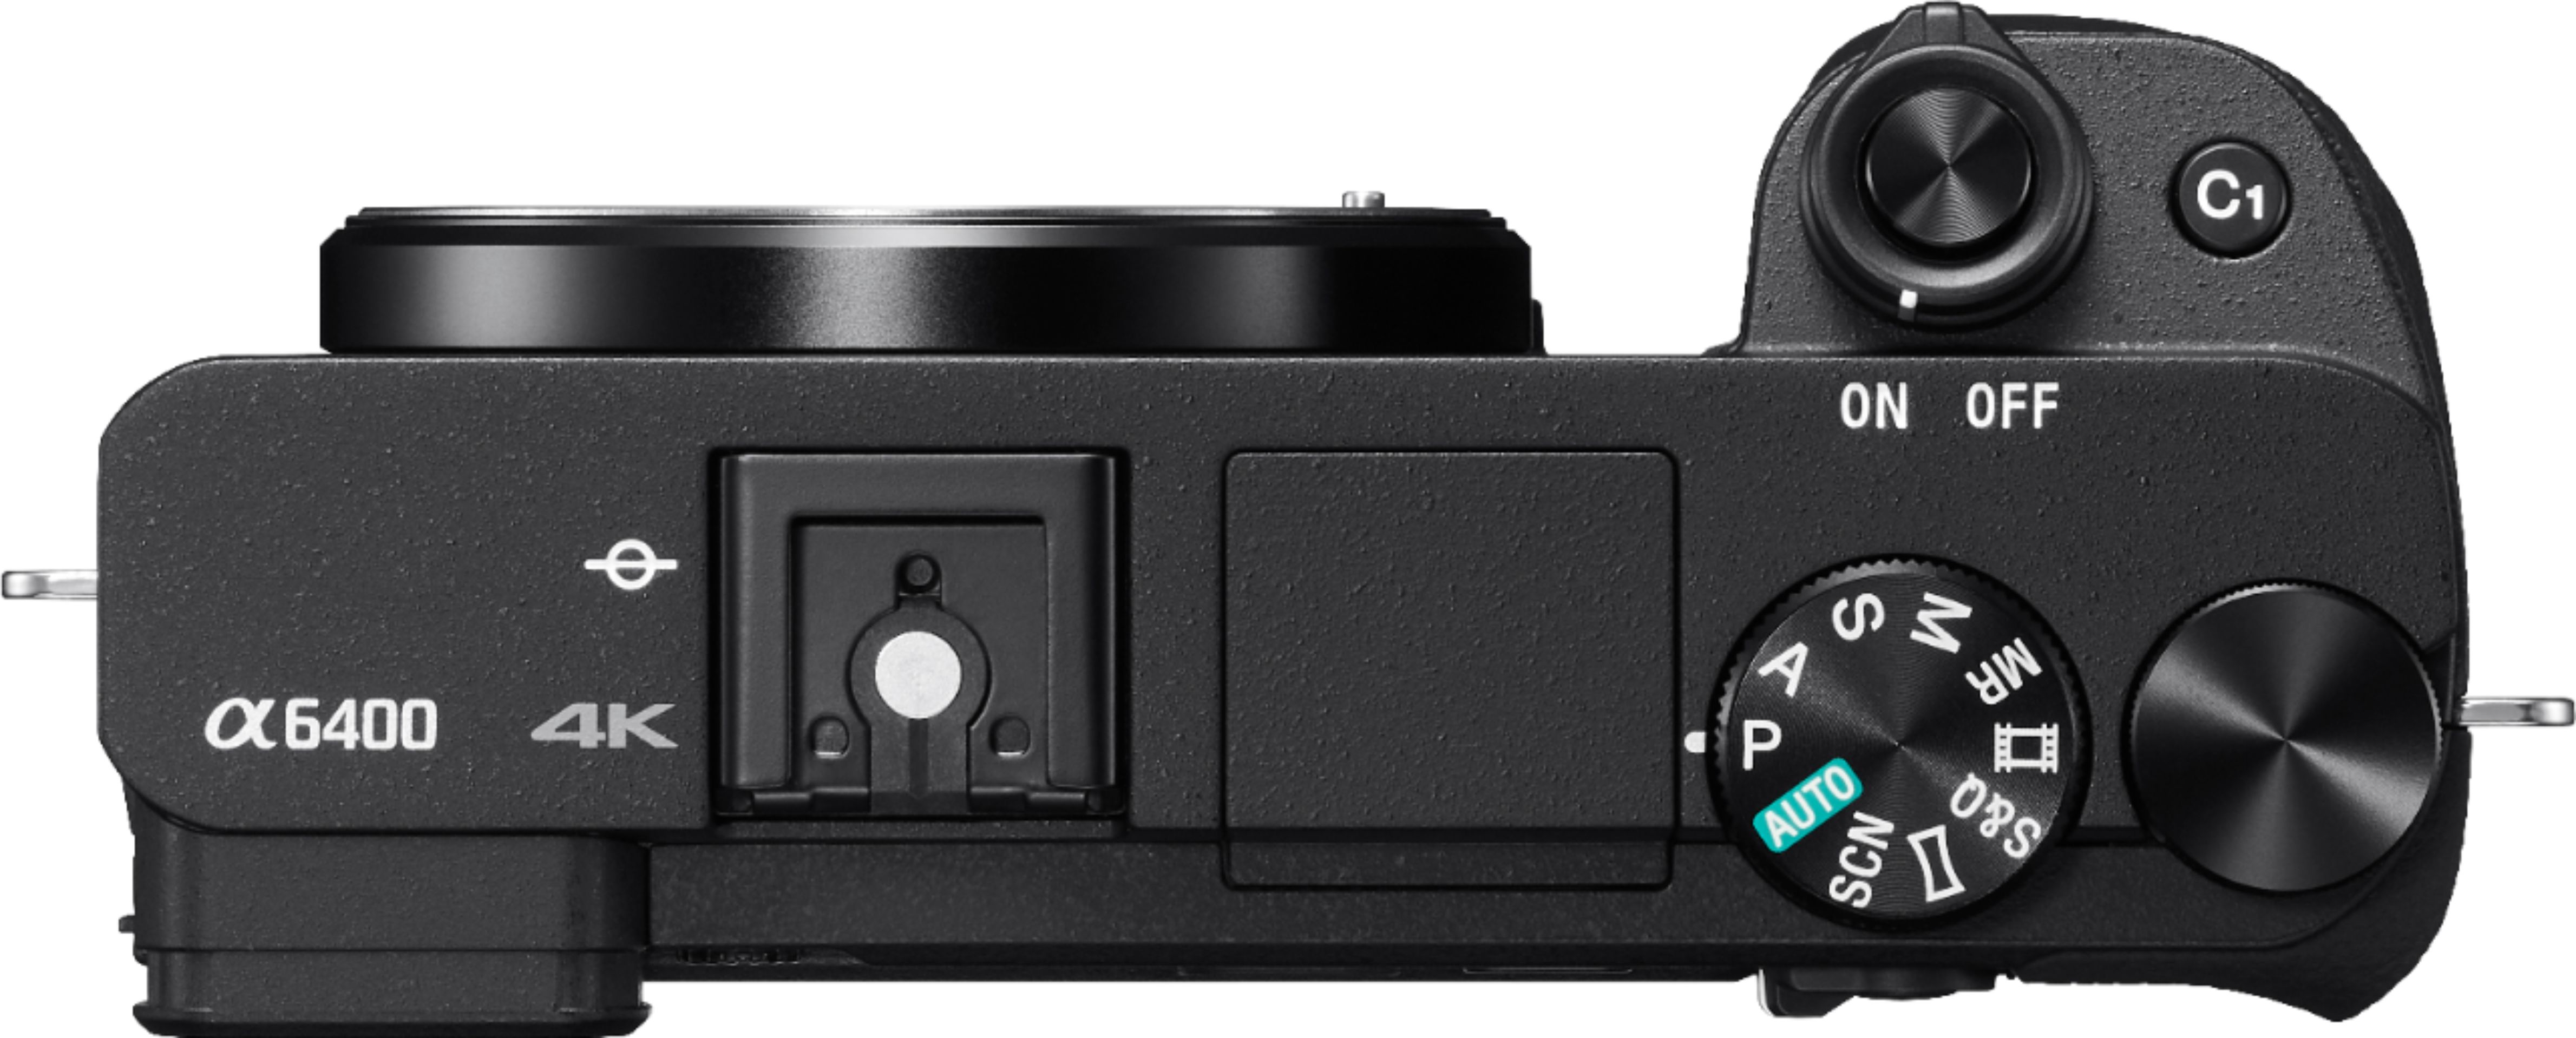 Best Only) Sony Mirrorless Buy ILCE-6400/B - a6400 Alpha Camera (Body Black